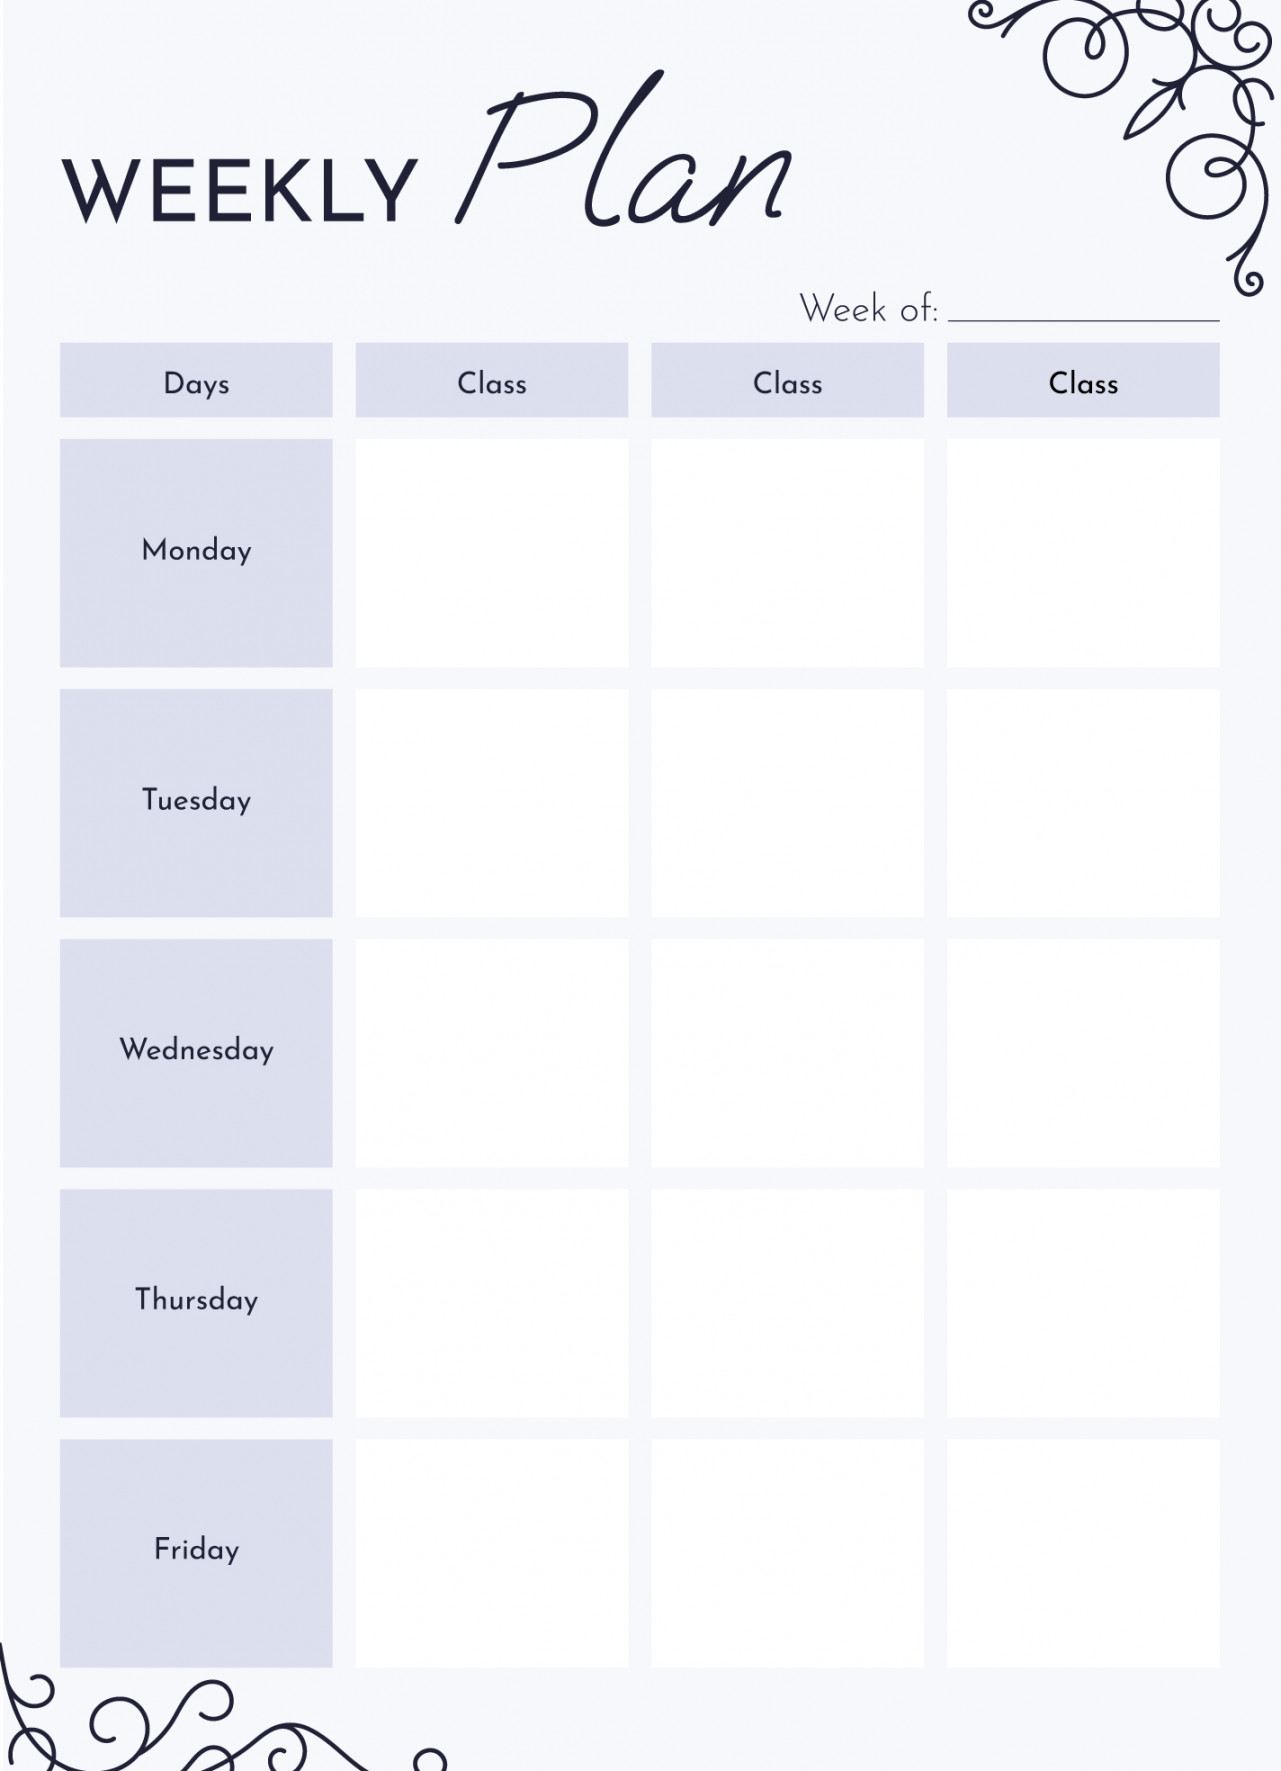 Aesthetic Class Schedule Free Google Docs Template - gdoc